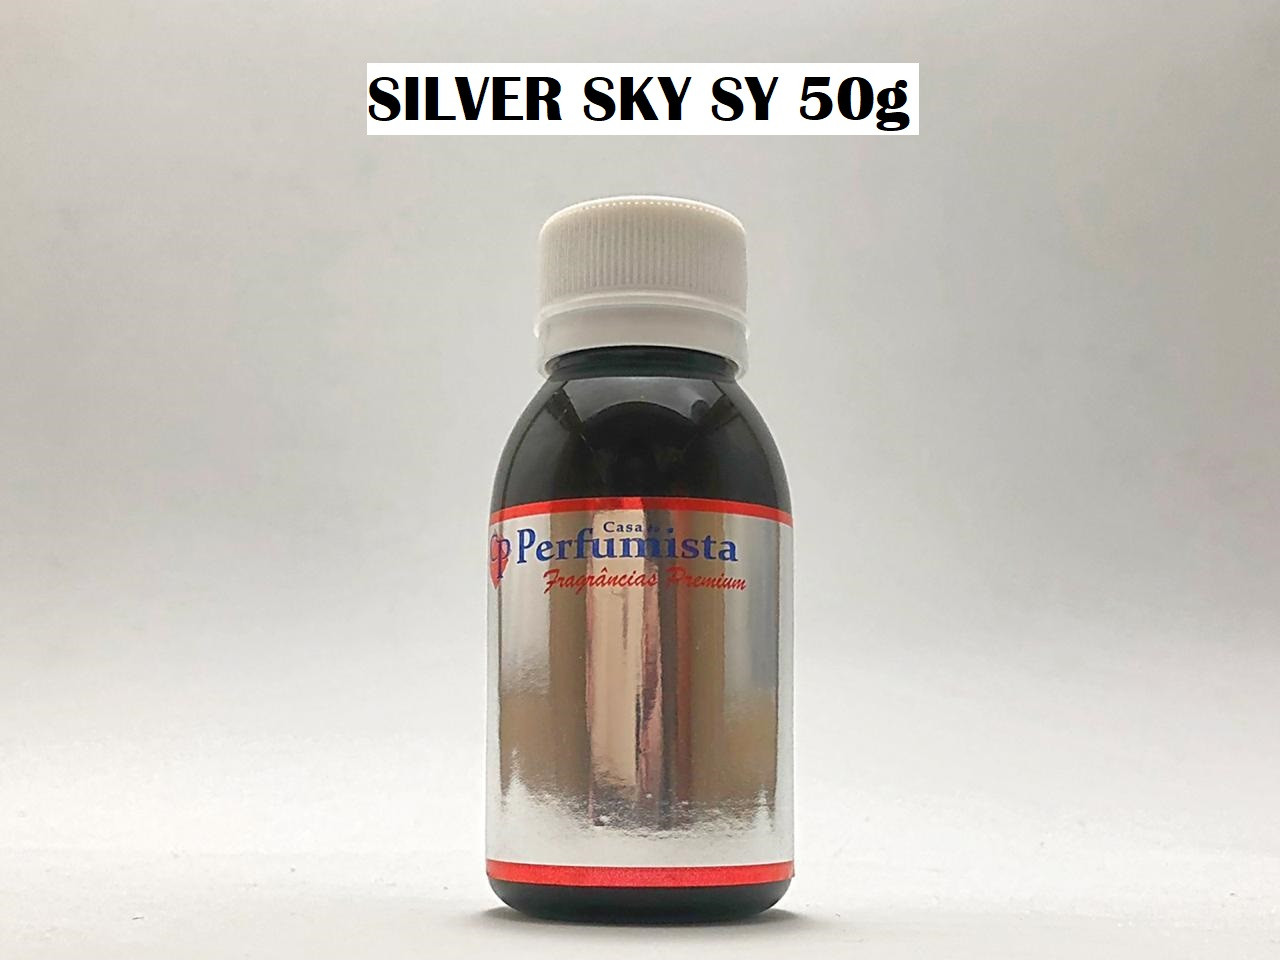 SILVER SKY SY 50g - Inspiração: Silver Scent Masculino 